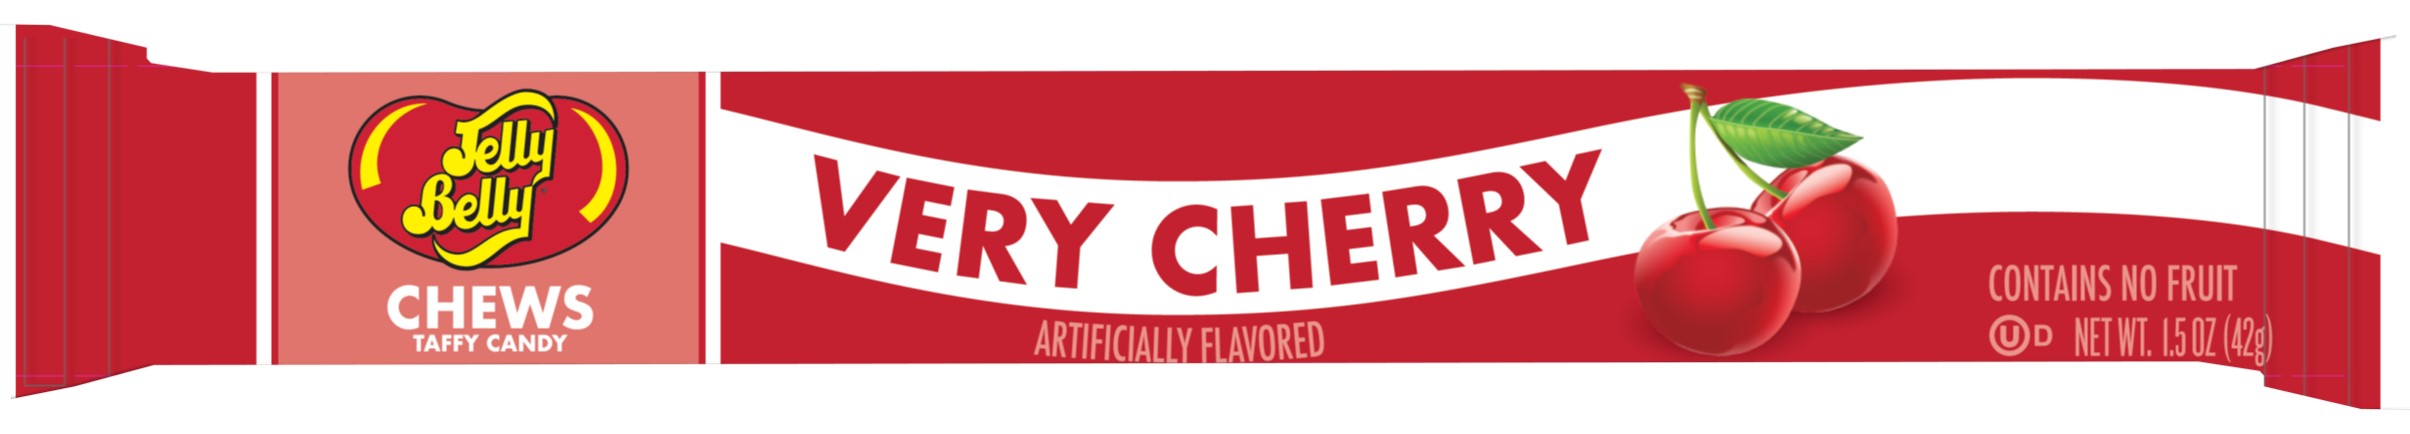 Jelly Belly Chews Taffy Bars 1.5oz Very Cherry